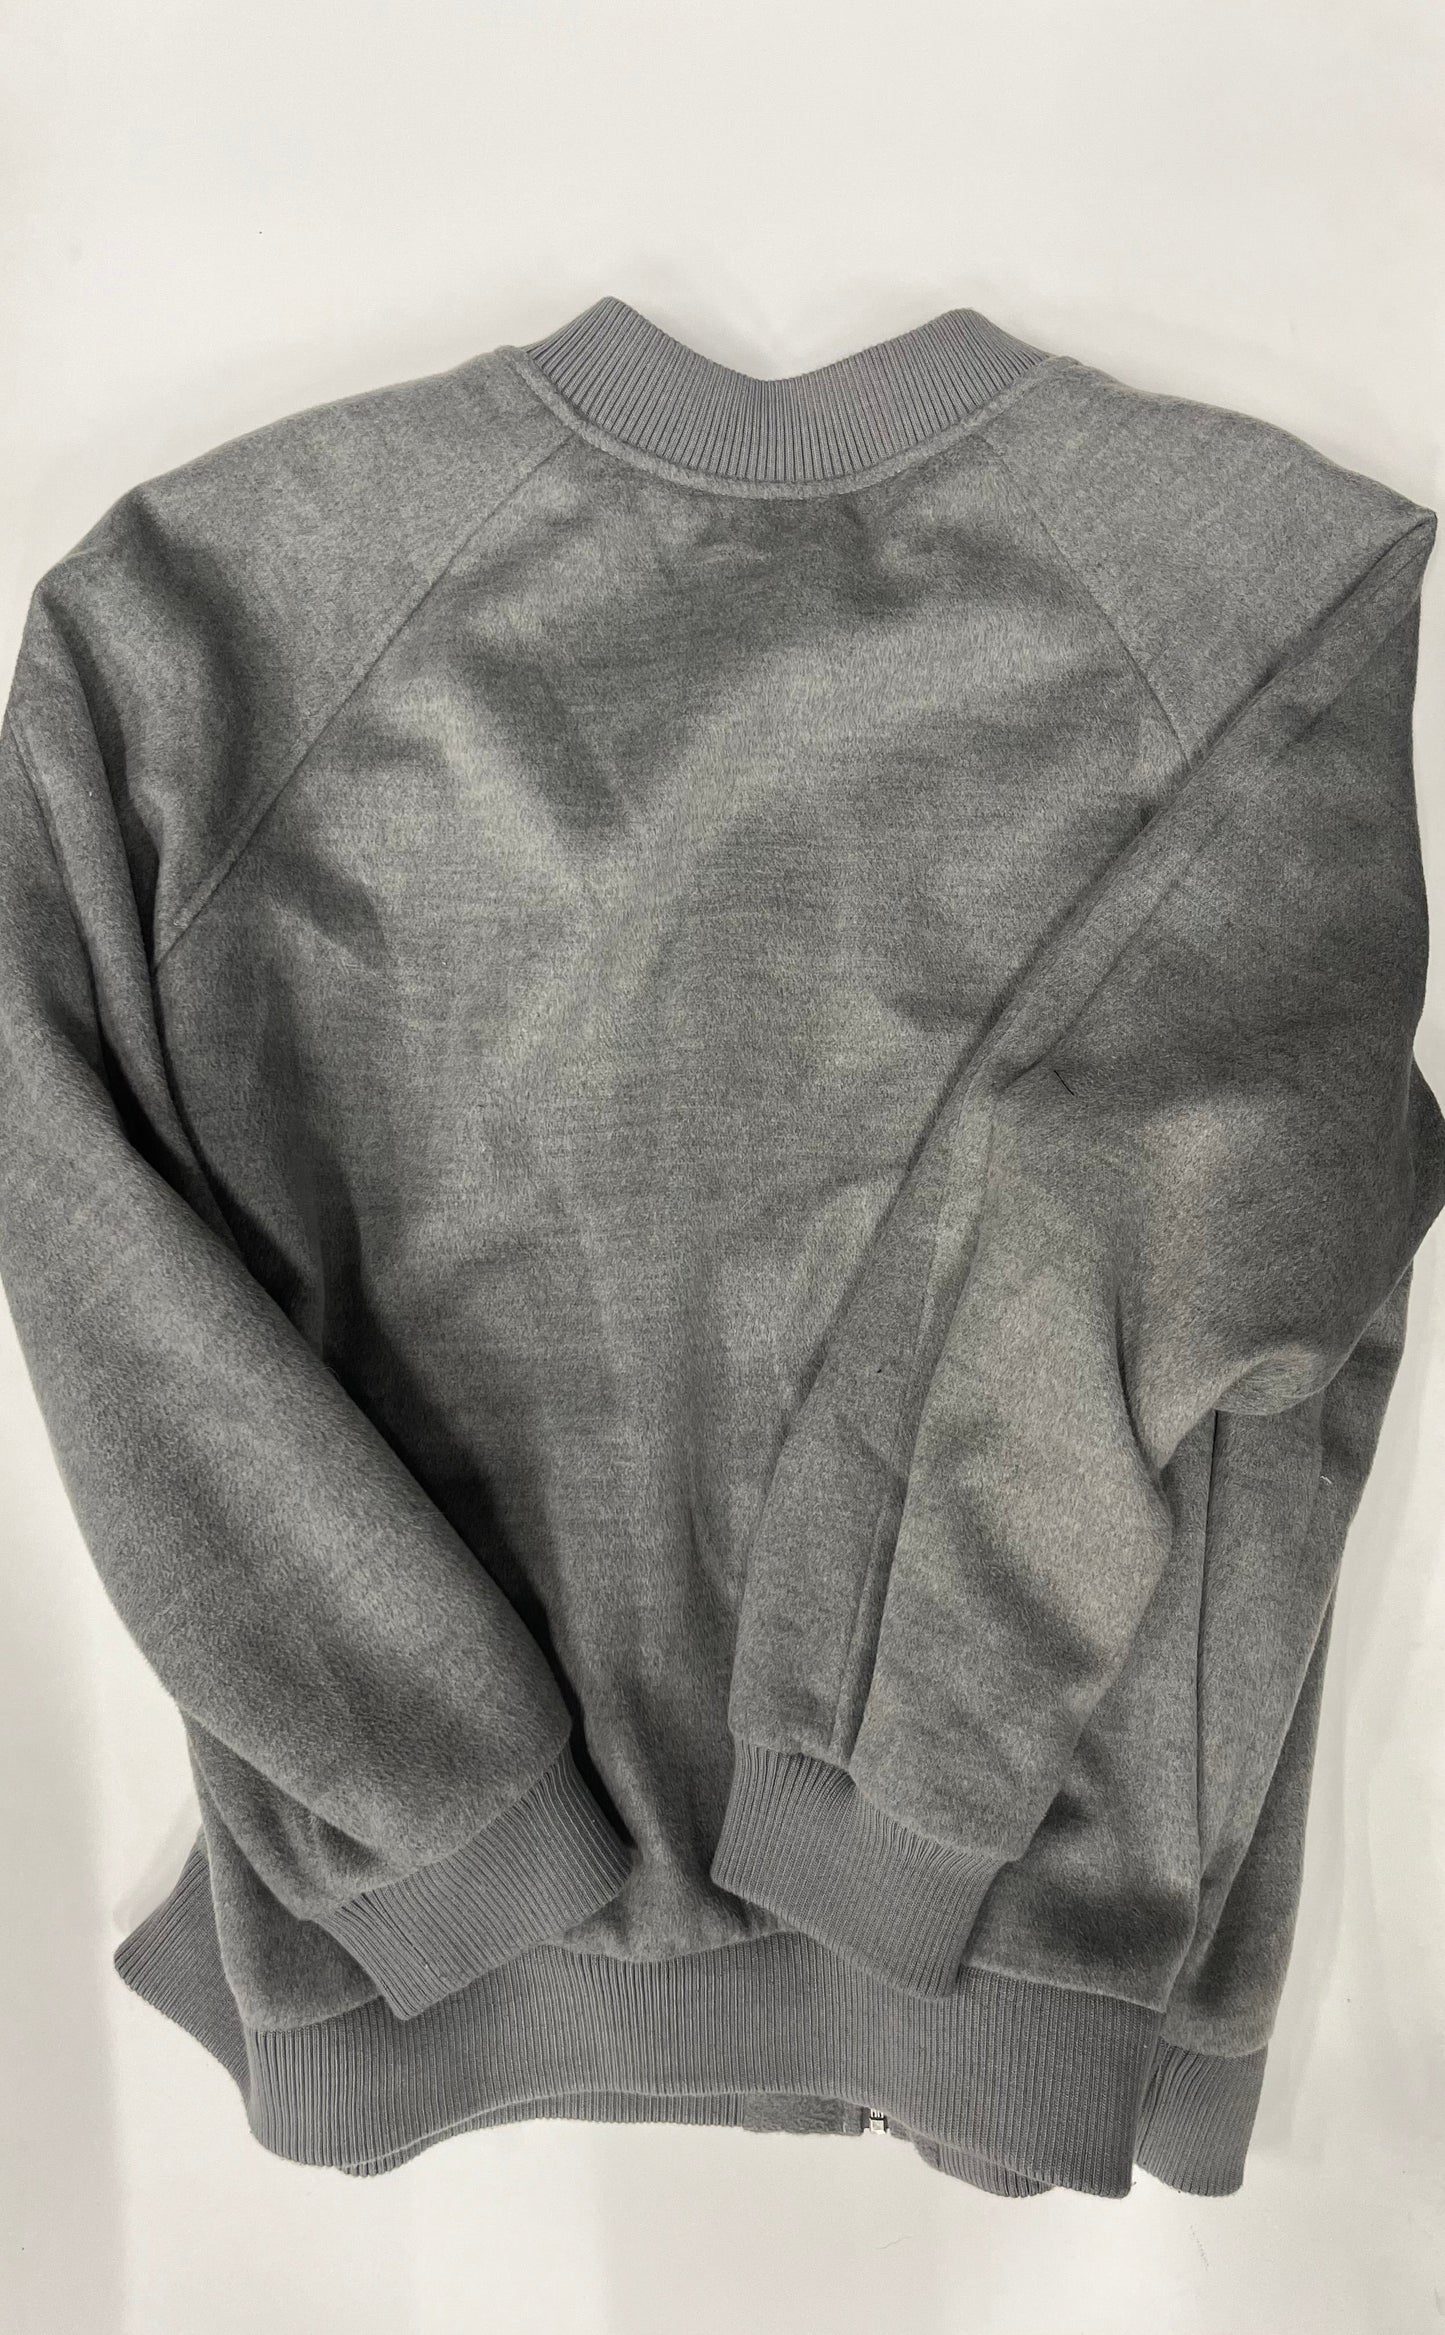 Jacket Fleece By Roamans  Size: 3x